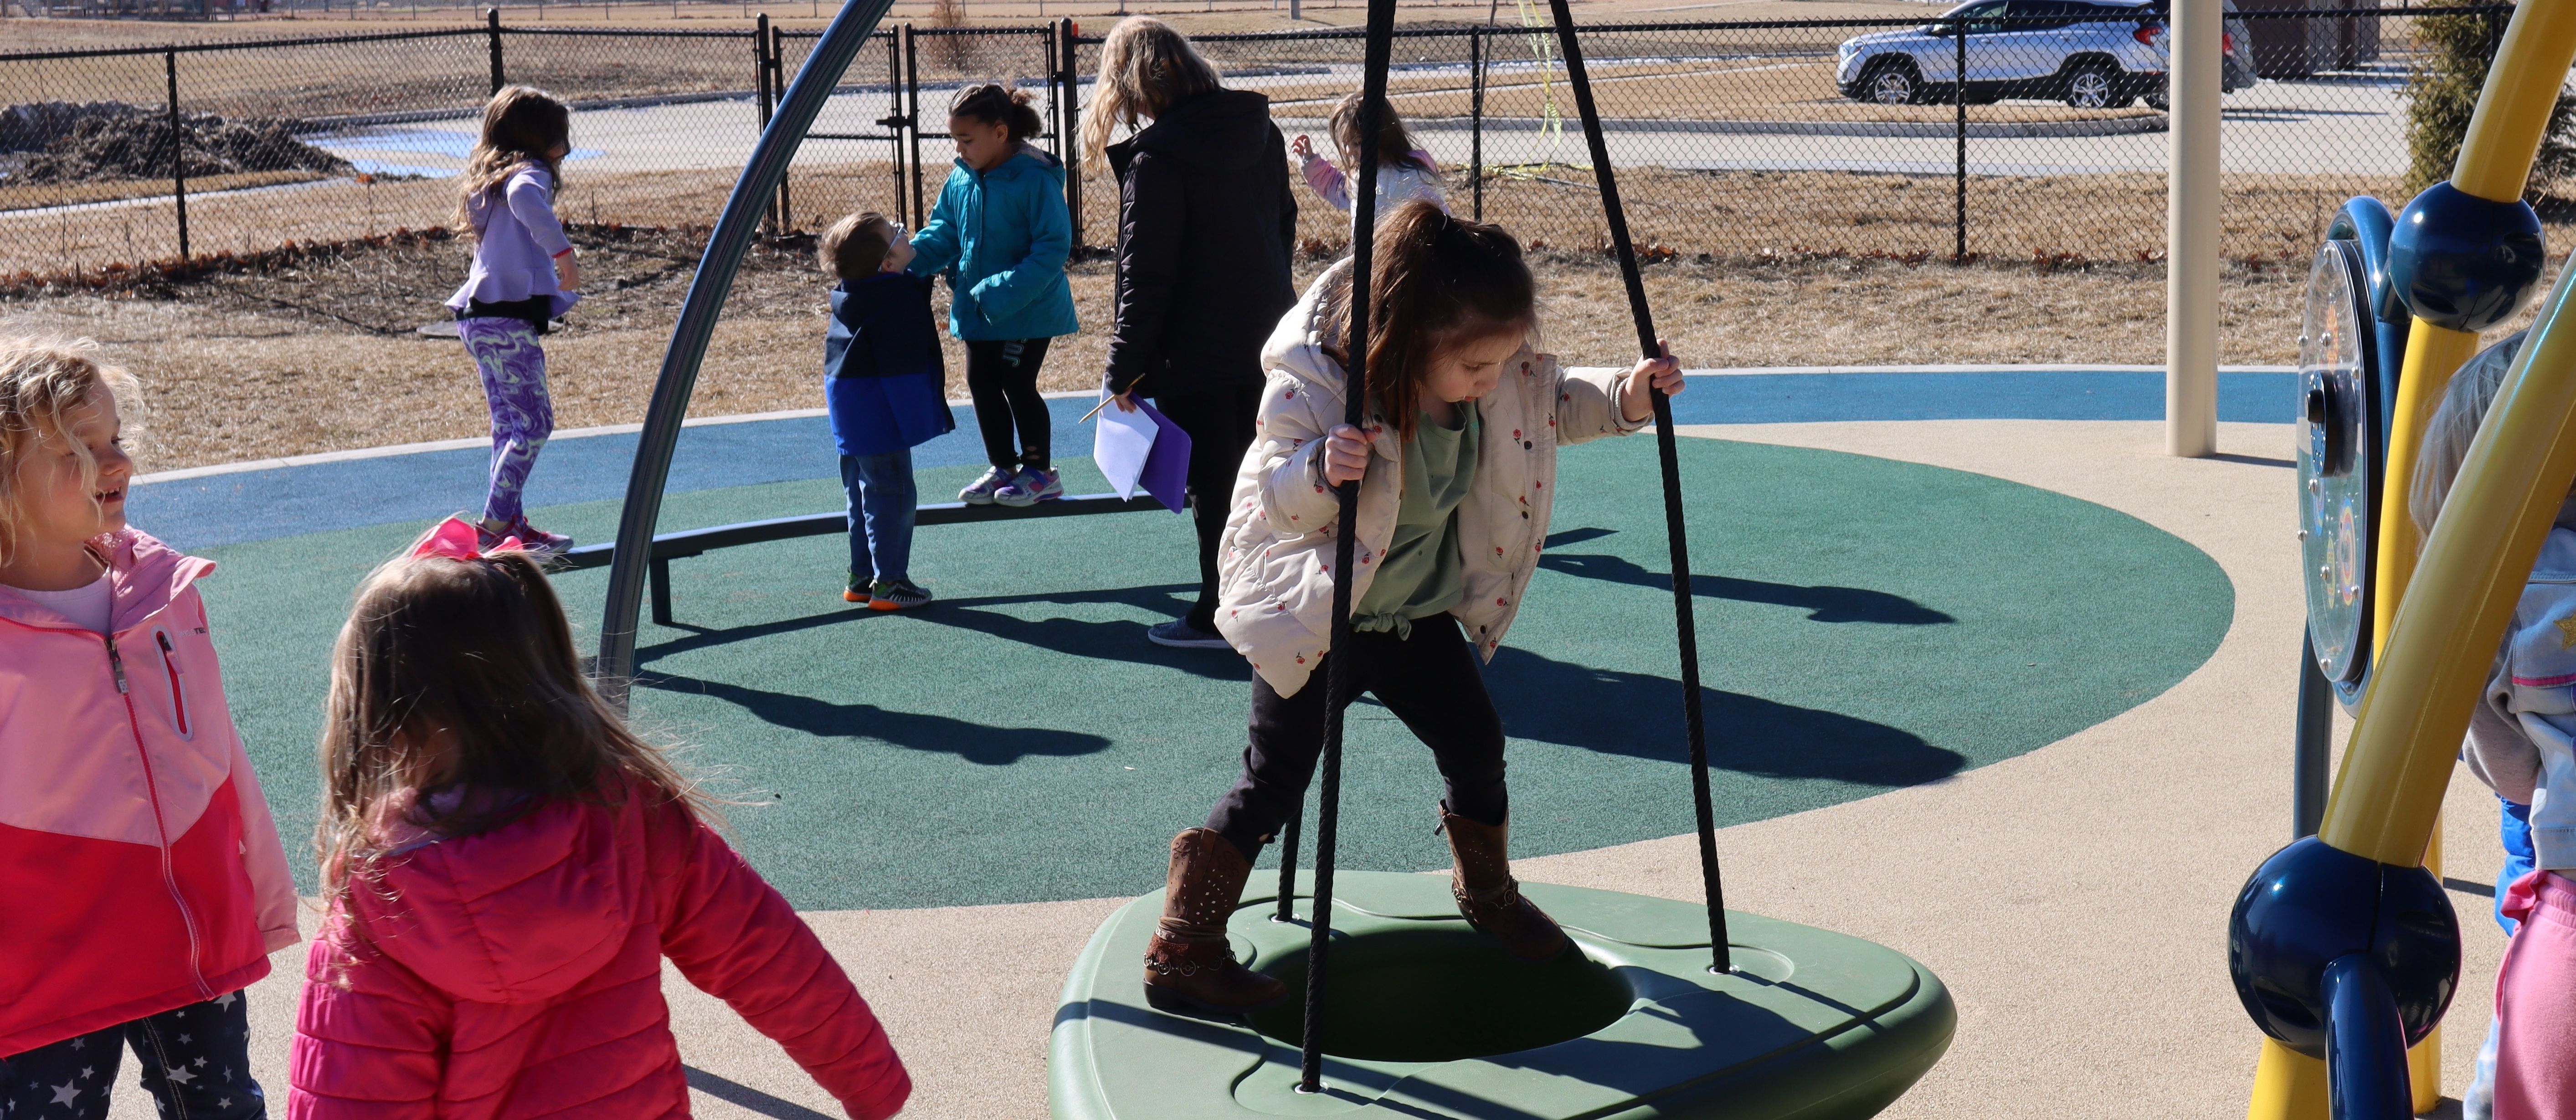 Preschool kids on the playground